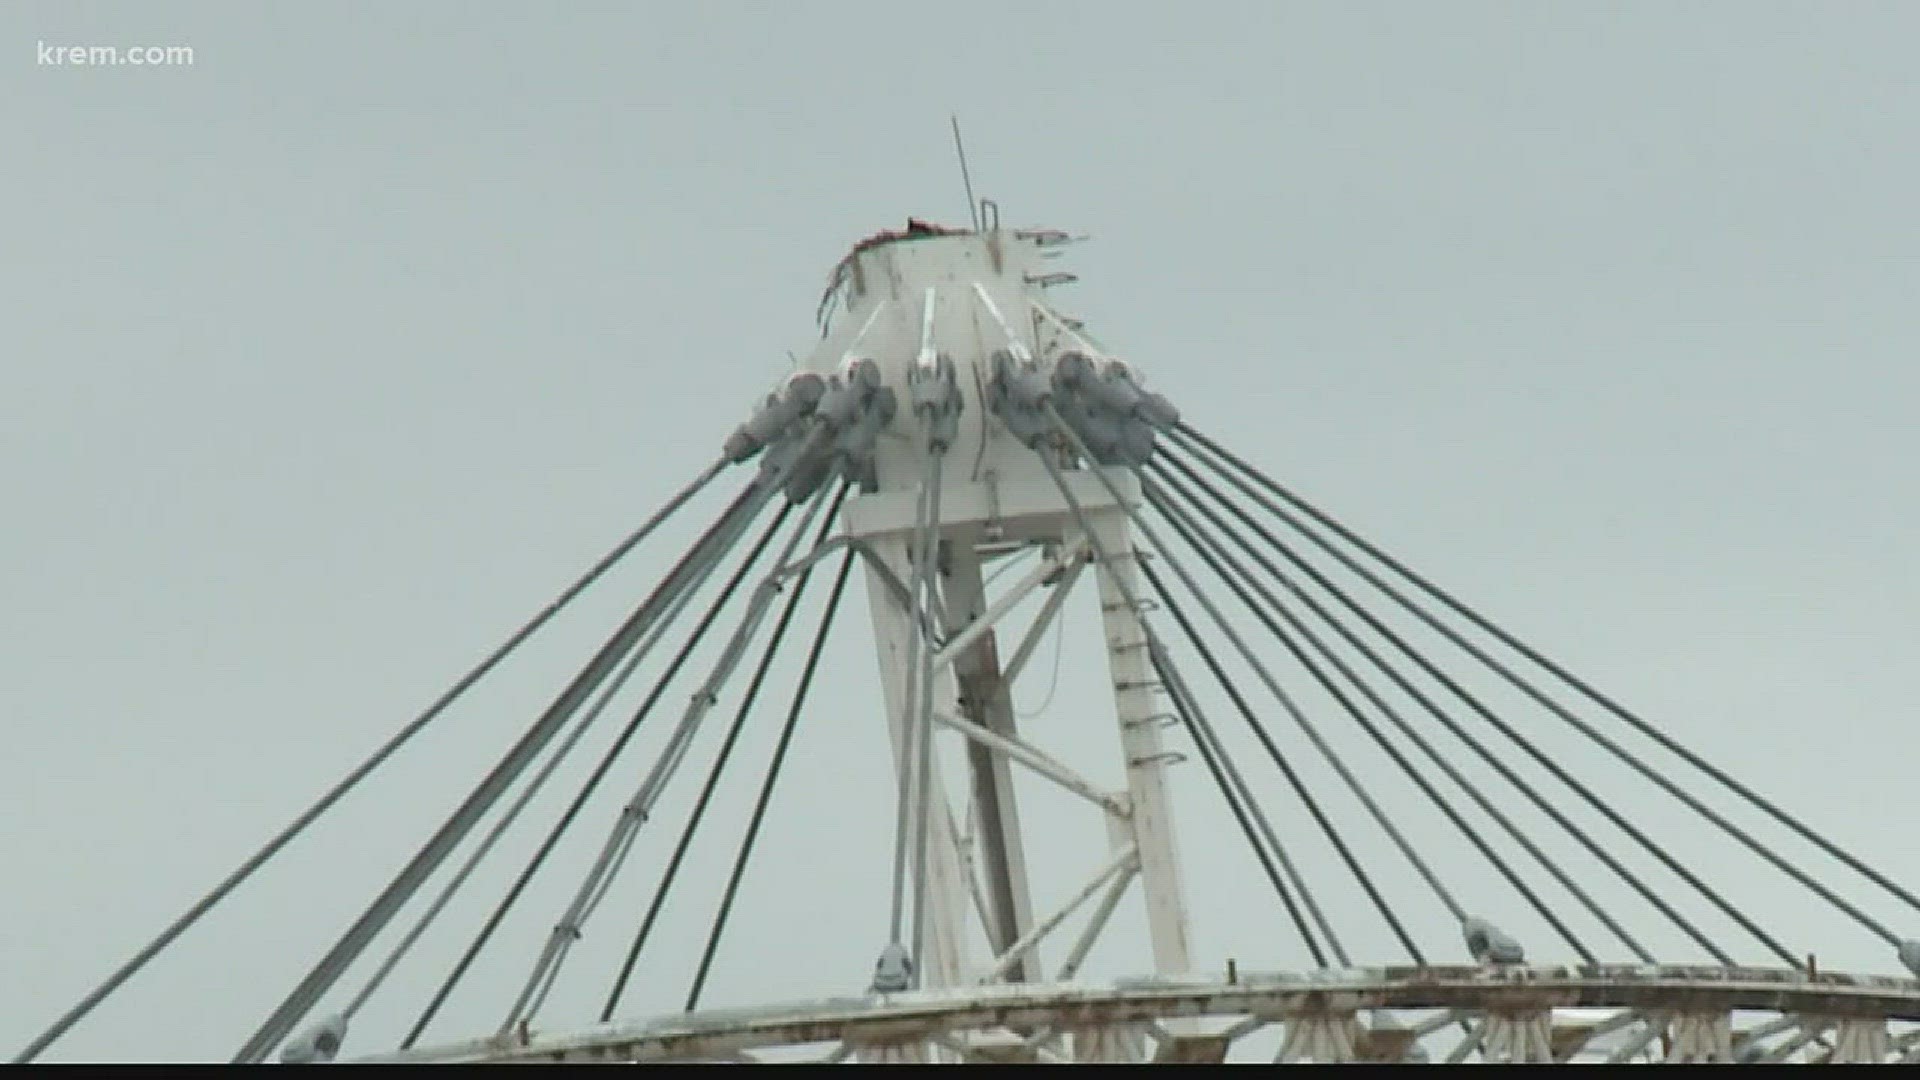 Ospreys nest as the top of the U.S Pavilion